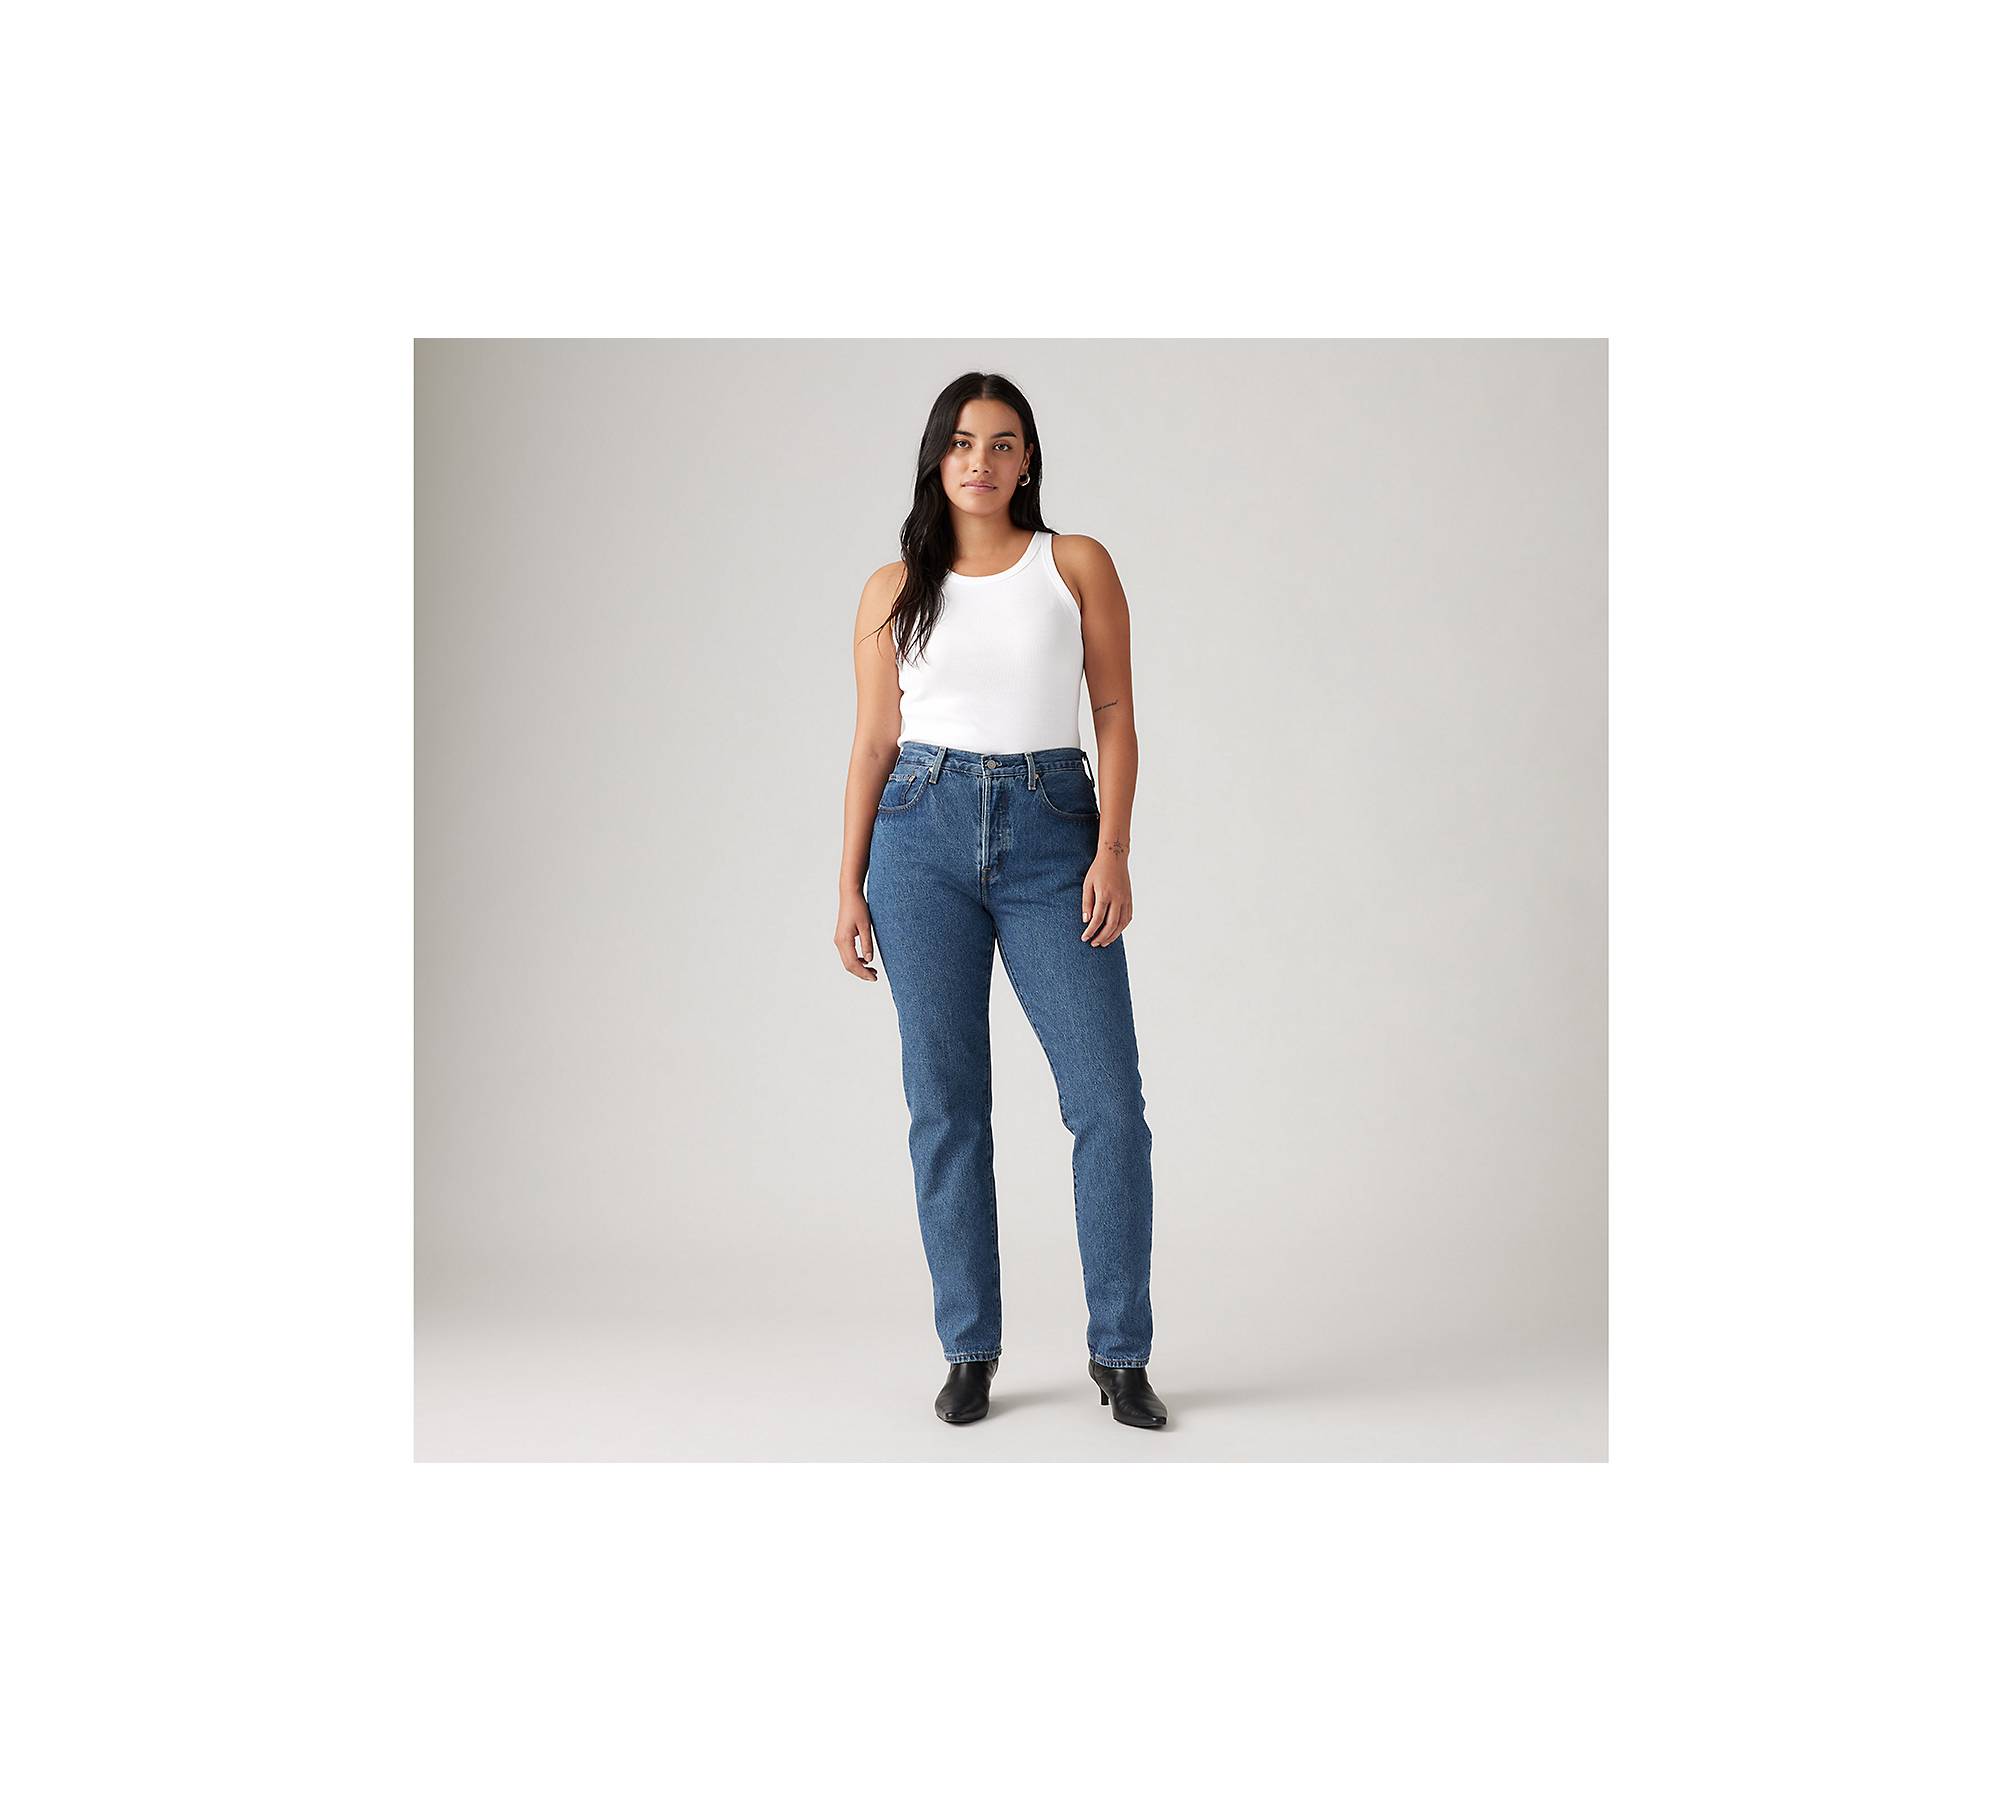  Levi's®: Women's Jeans